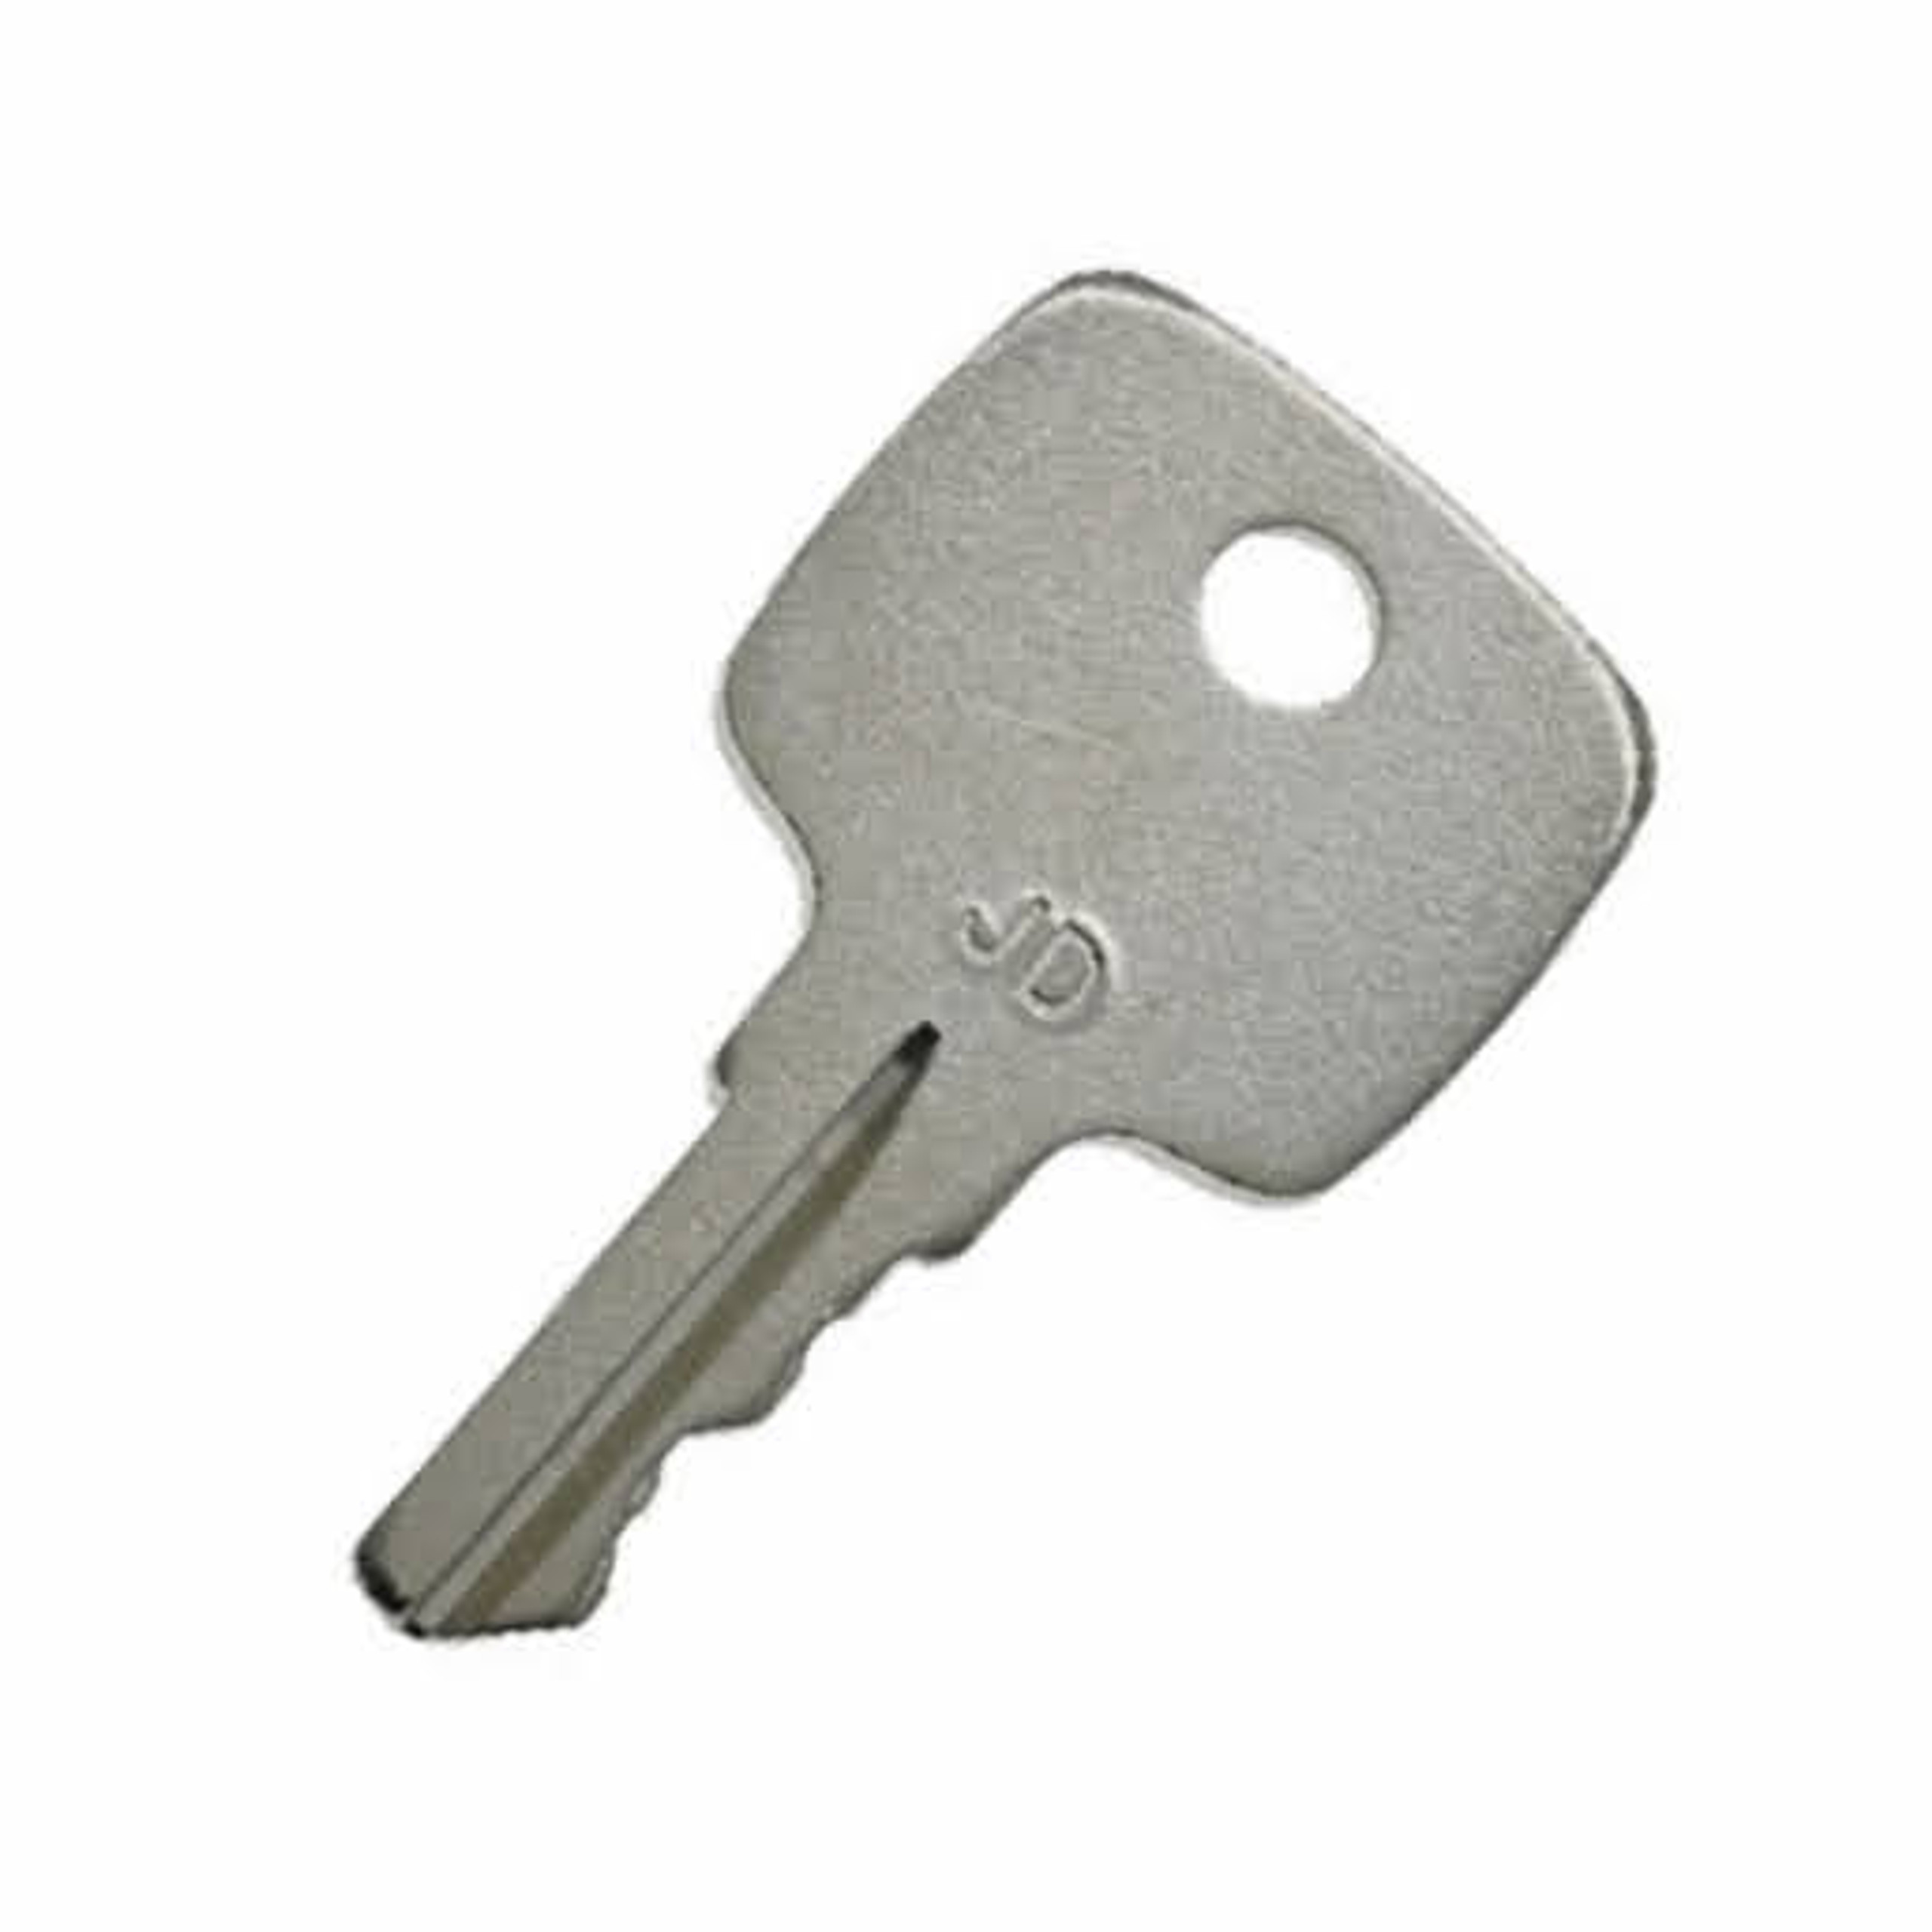 John Deere Ignition Key replaces AR51481 - heavyequipmentkeys.com